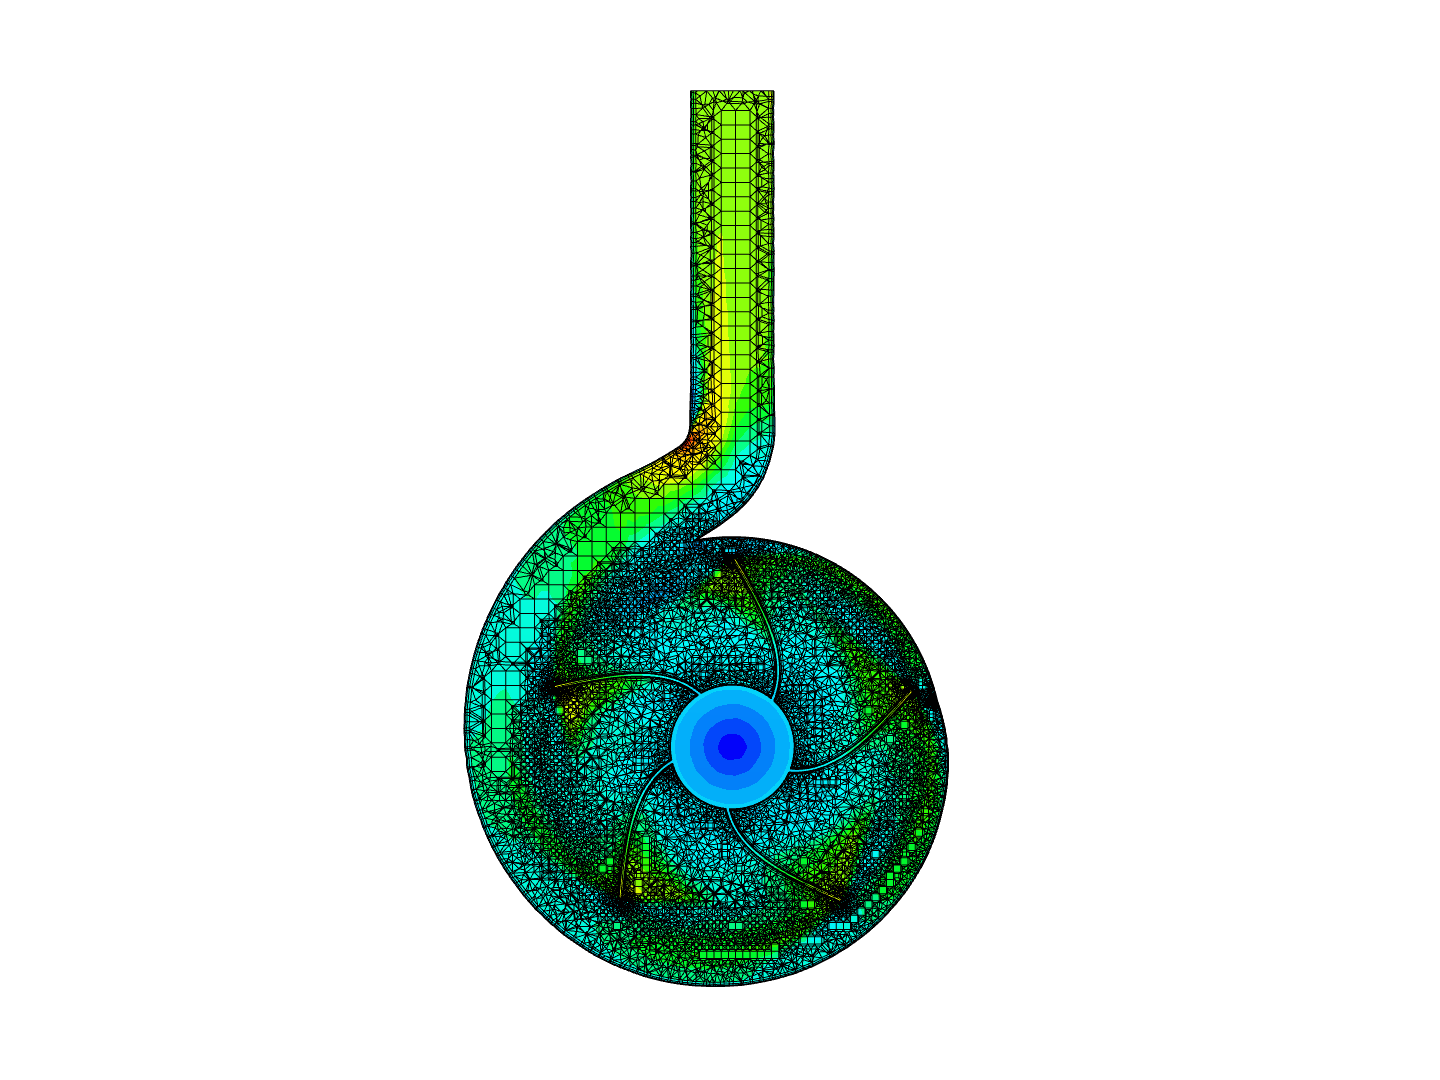 Centrifugal Pump Fluid Dynamics Analysis image